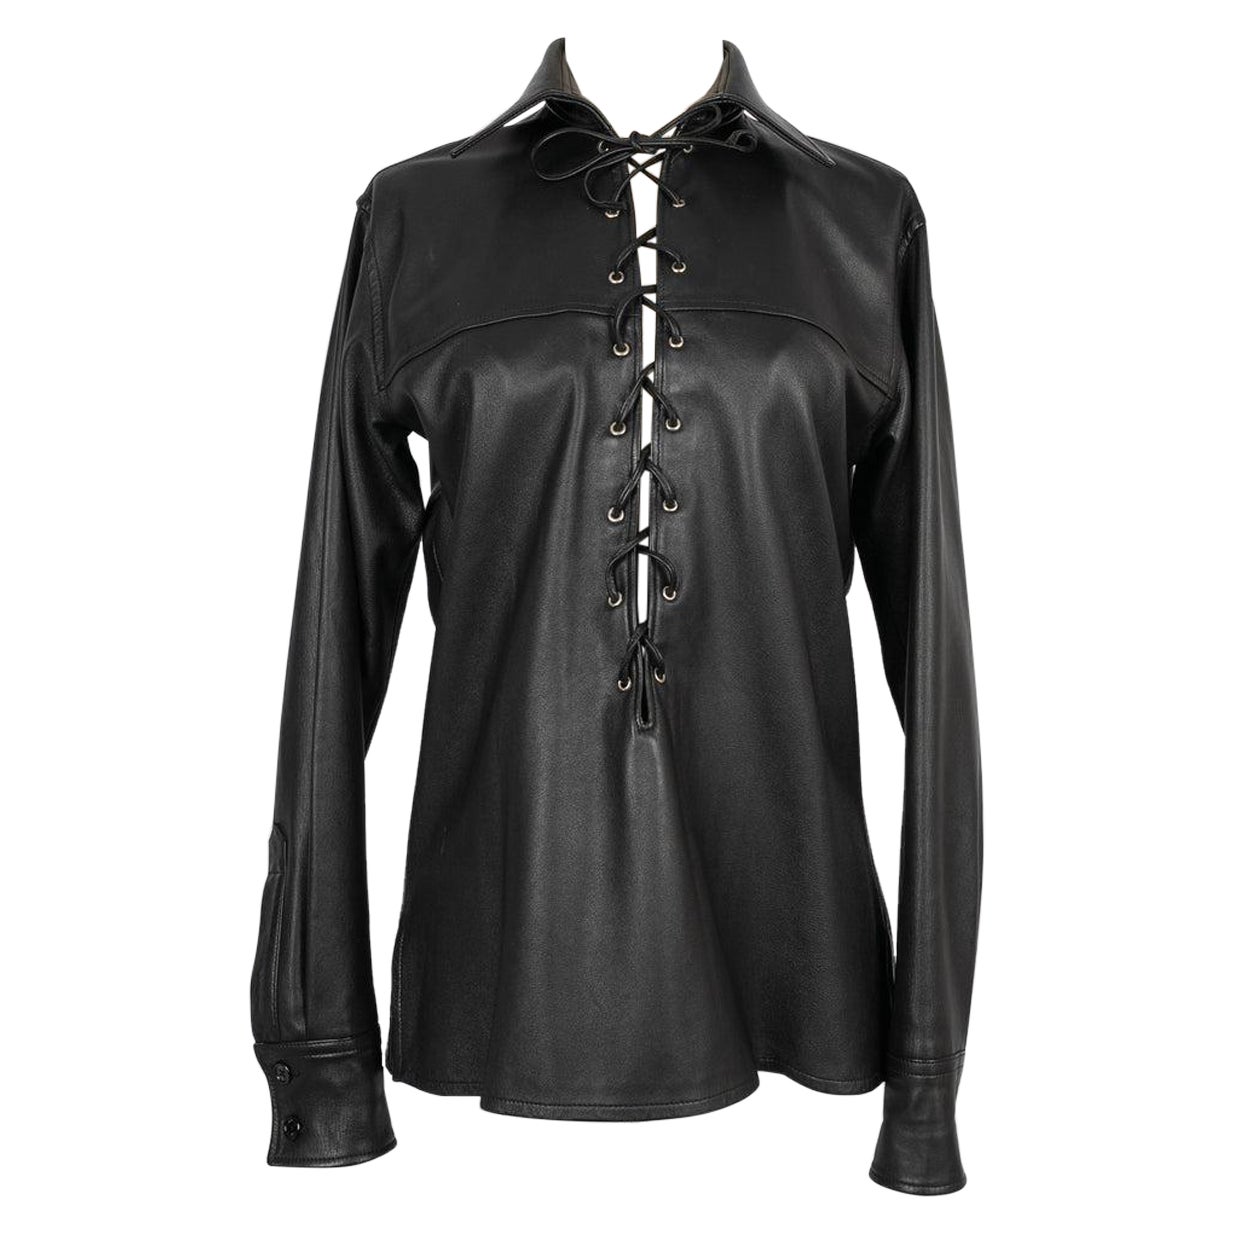 Yves Saint Laurent Saharan Black Leather Top For Sale